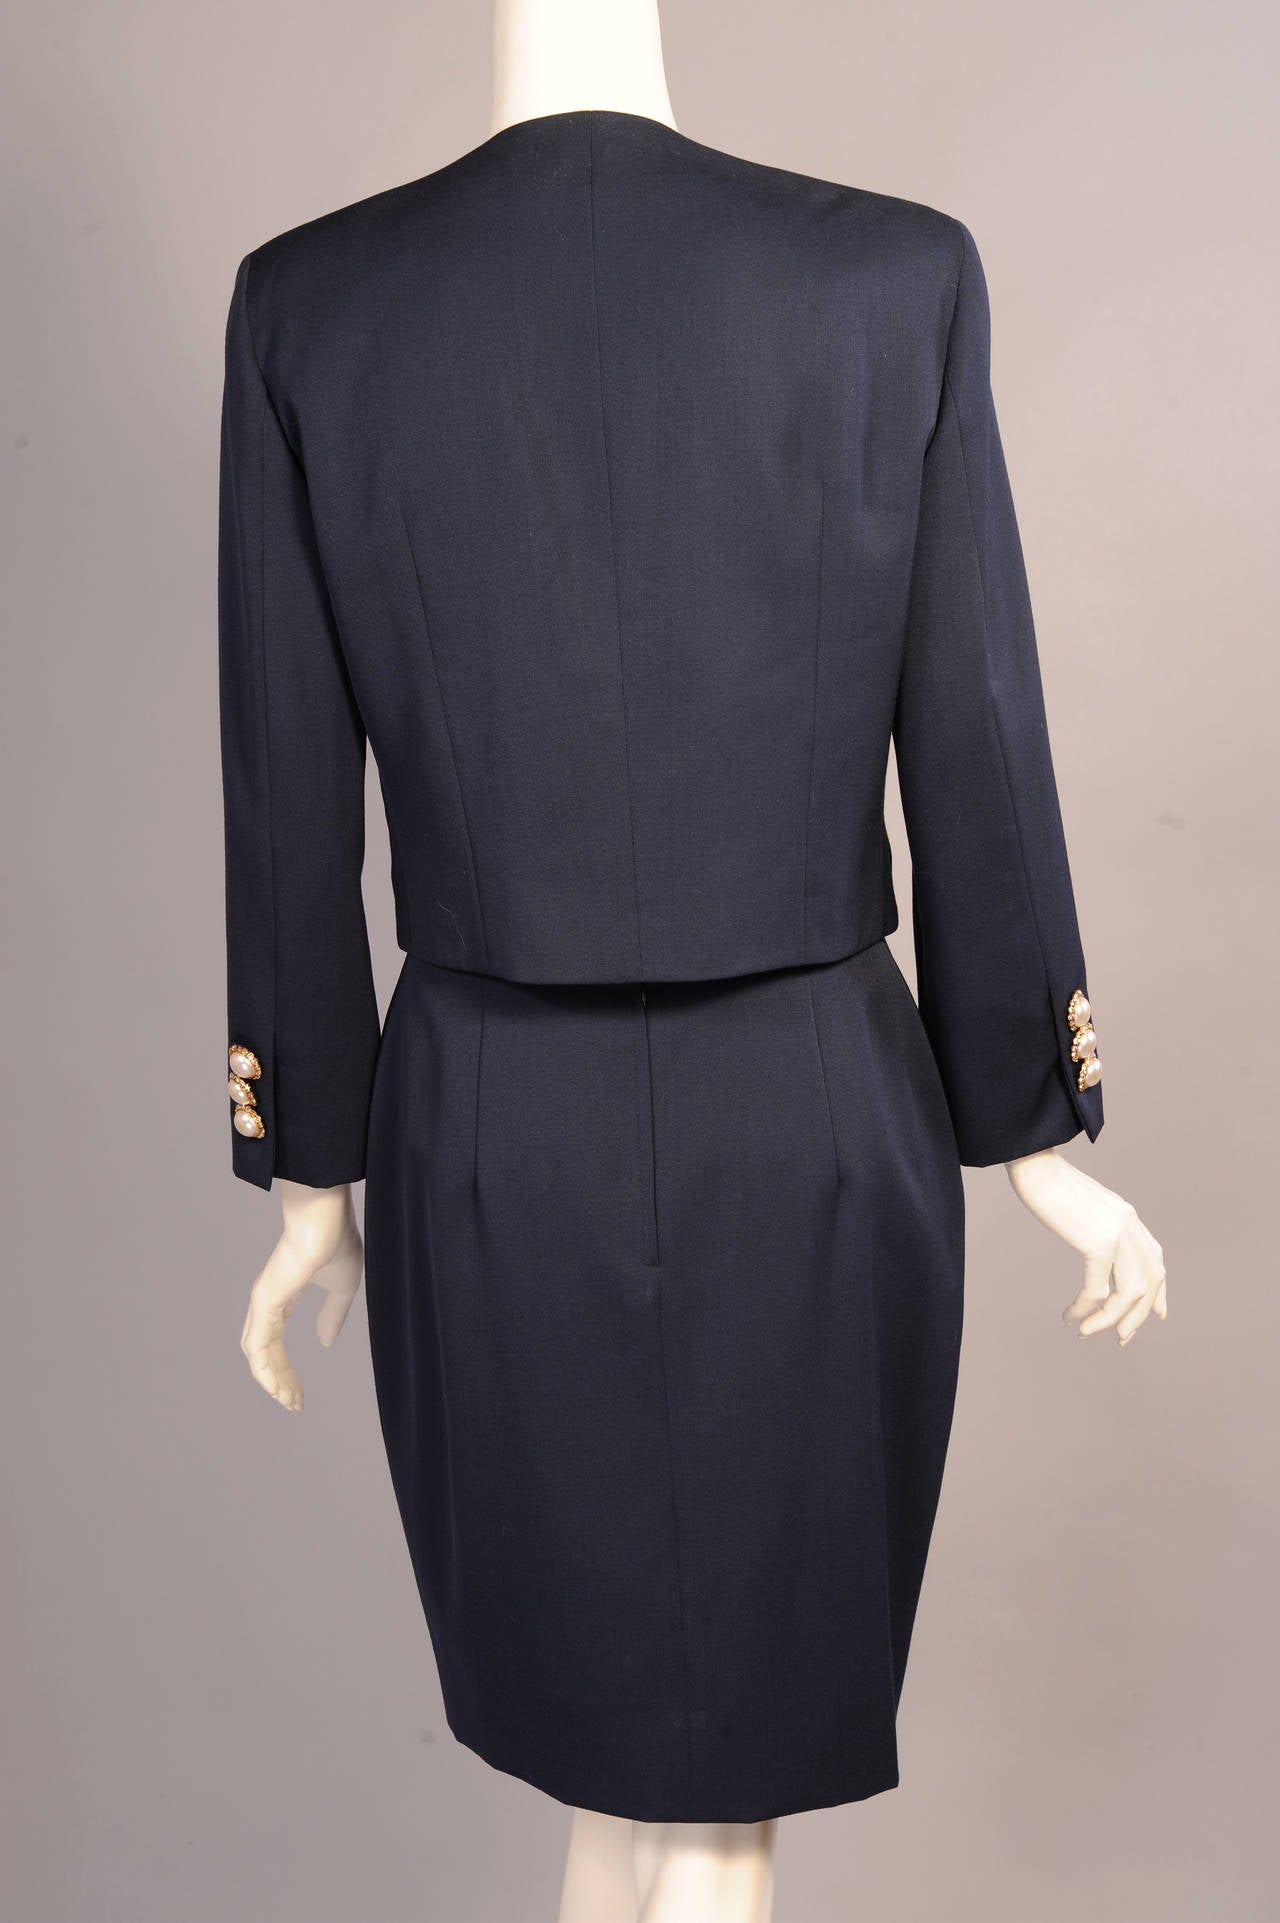  Costume couture Moschino, poches humoristiques « Poke Fun at Chanel » avec vestes et jupe  en vente 2